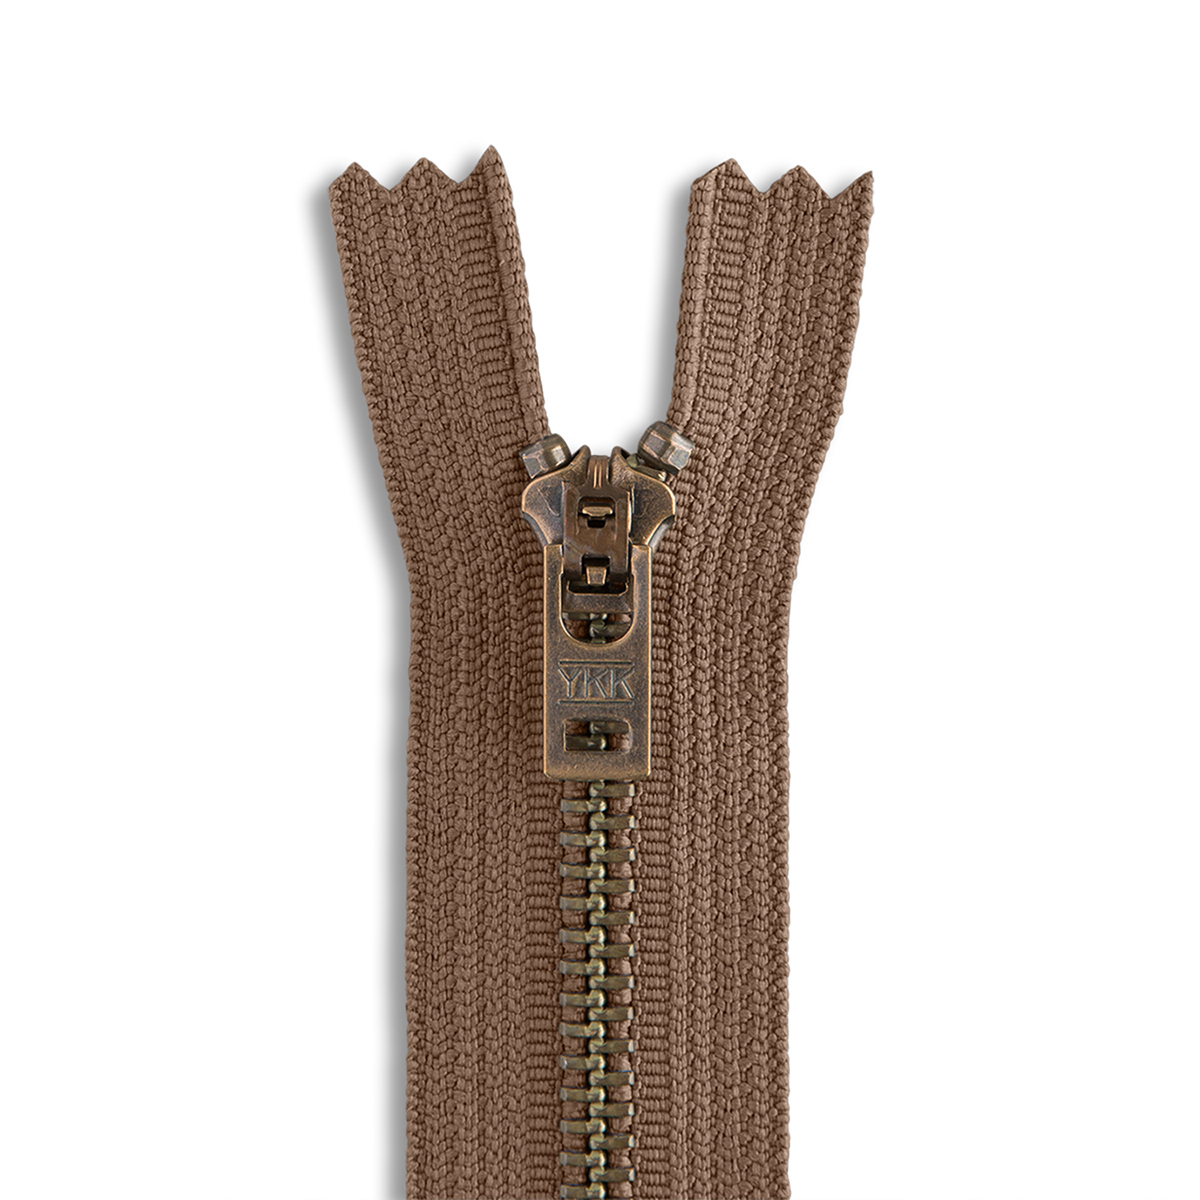 Zipper Holder Upper for Jeans - Clasp to Keep Pants Zipper up - Hook for  Jeans Zipper and Button - Keep Zipper up on Pants - Bronze - FYOURH